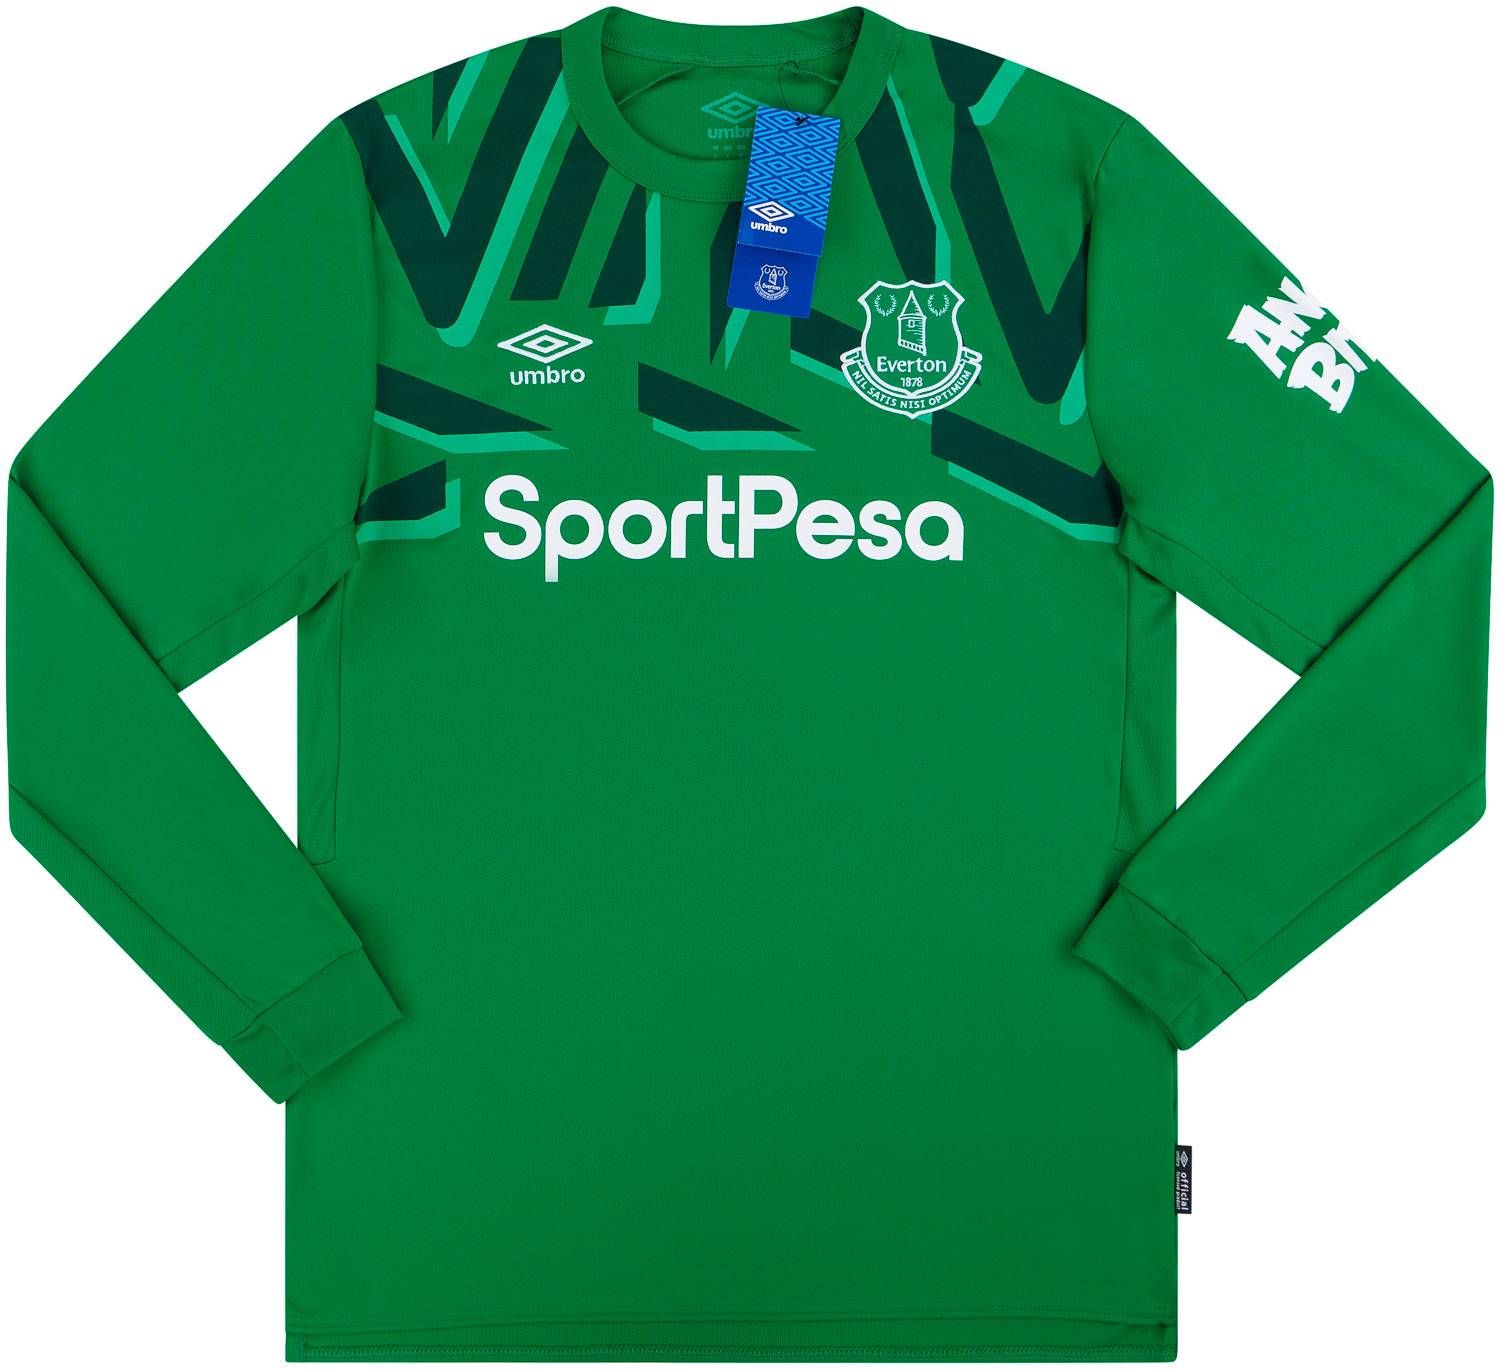 2019-20 Everton GK Shirt